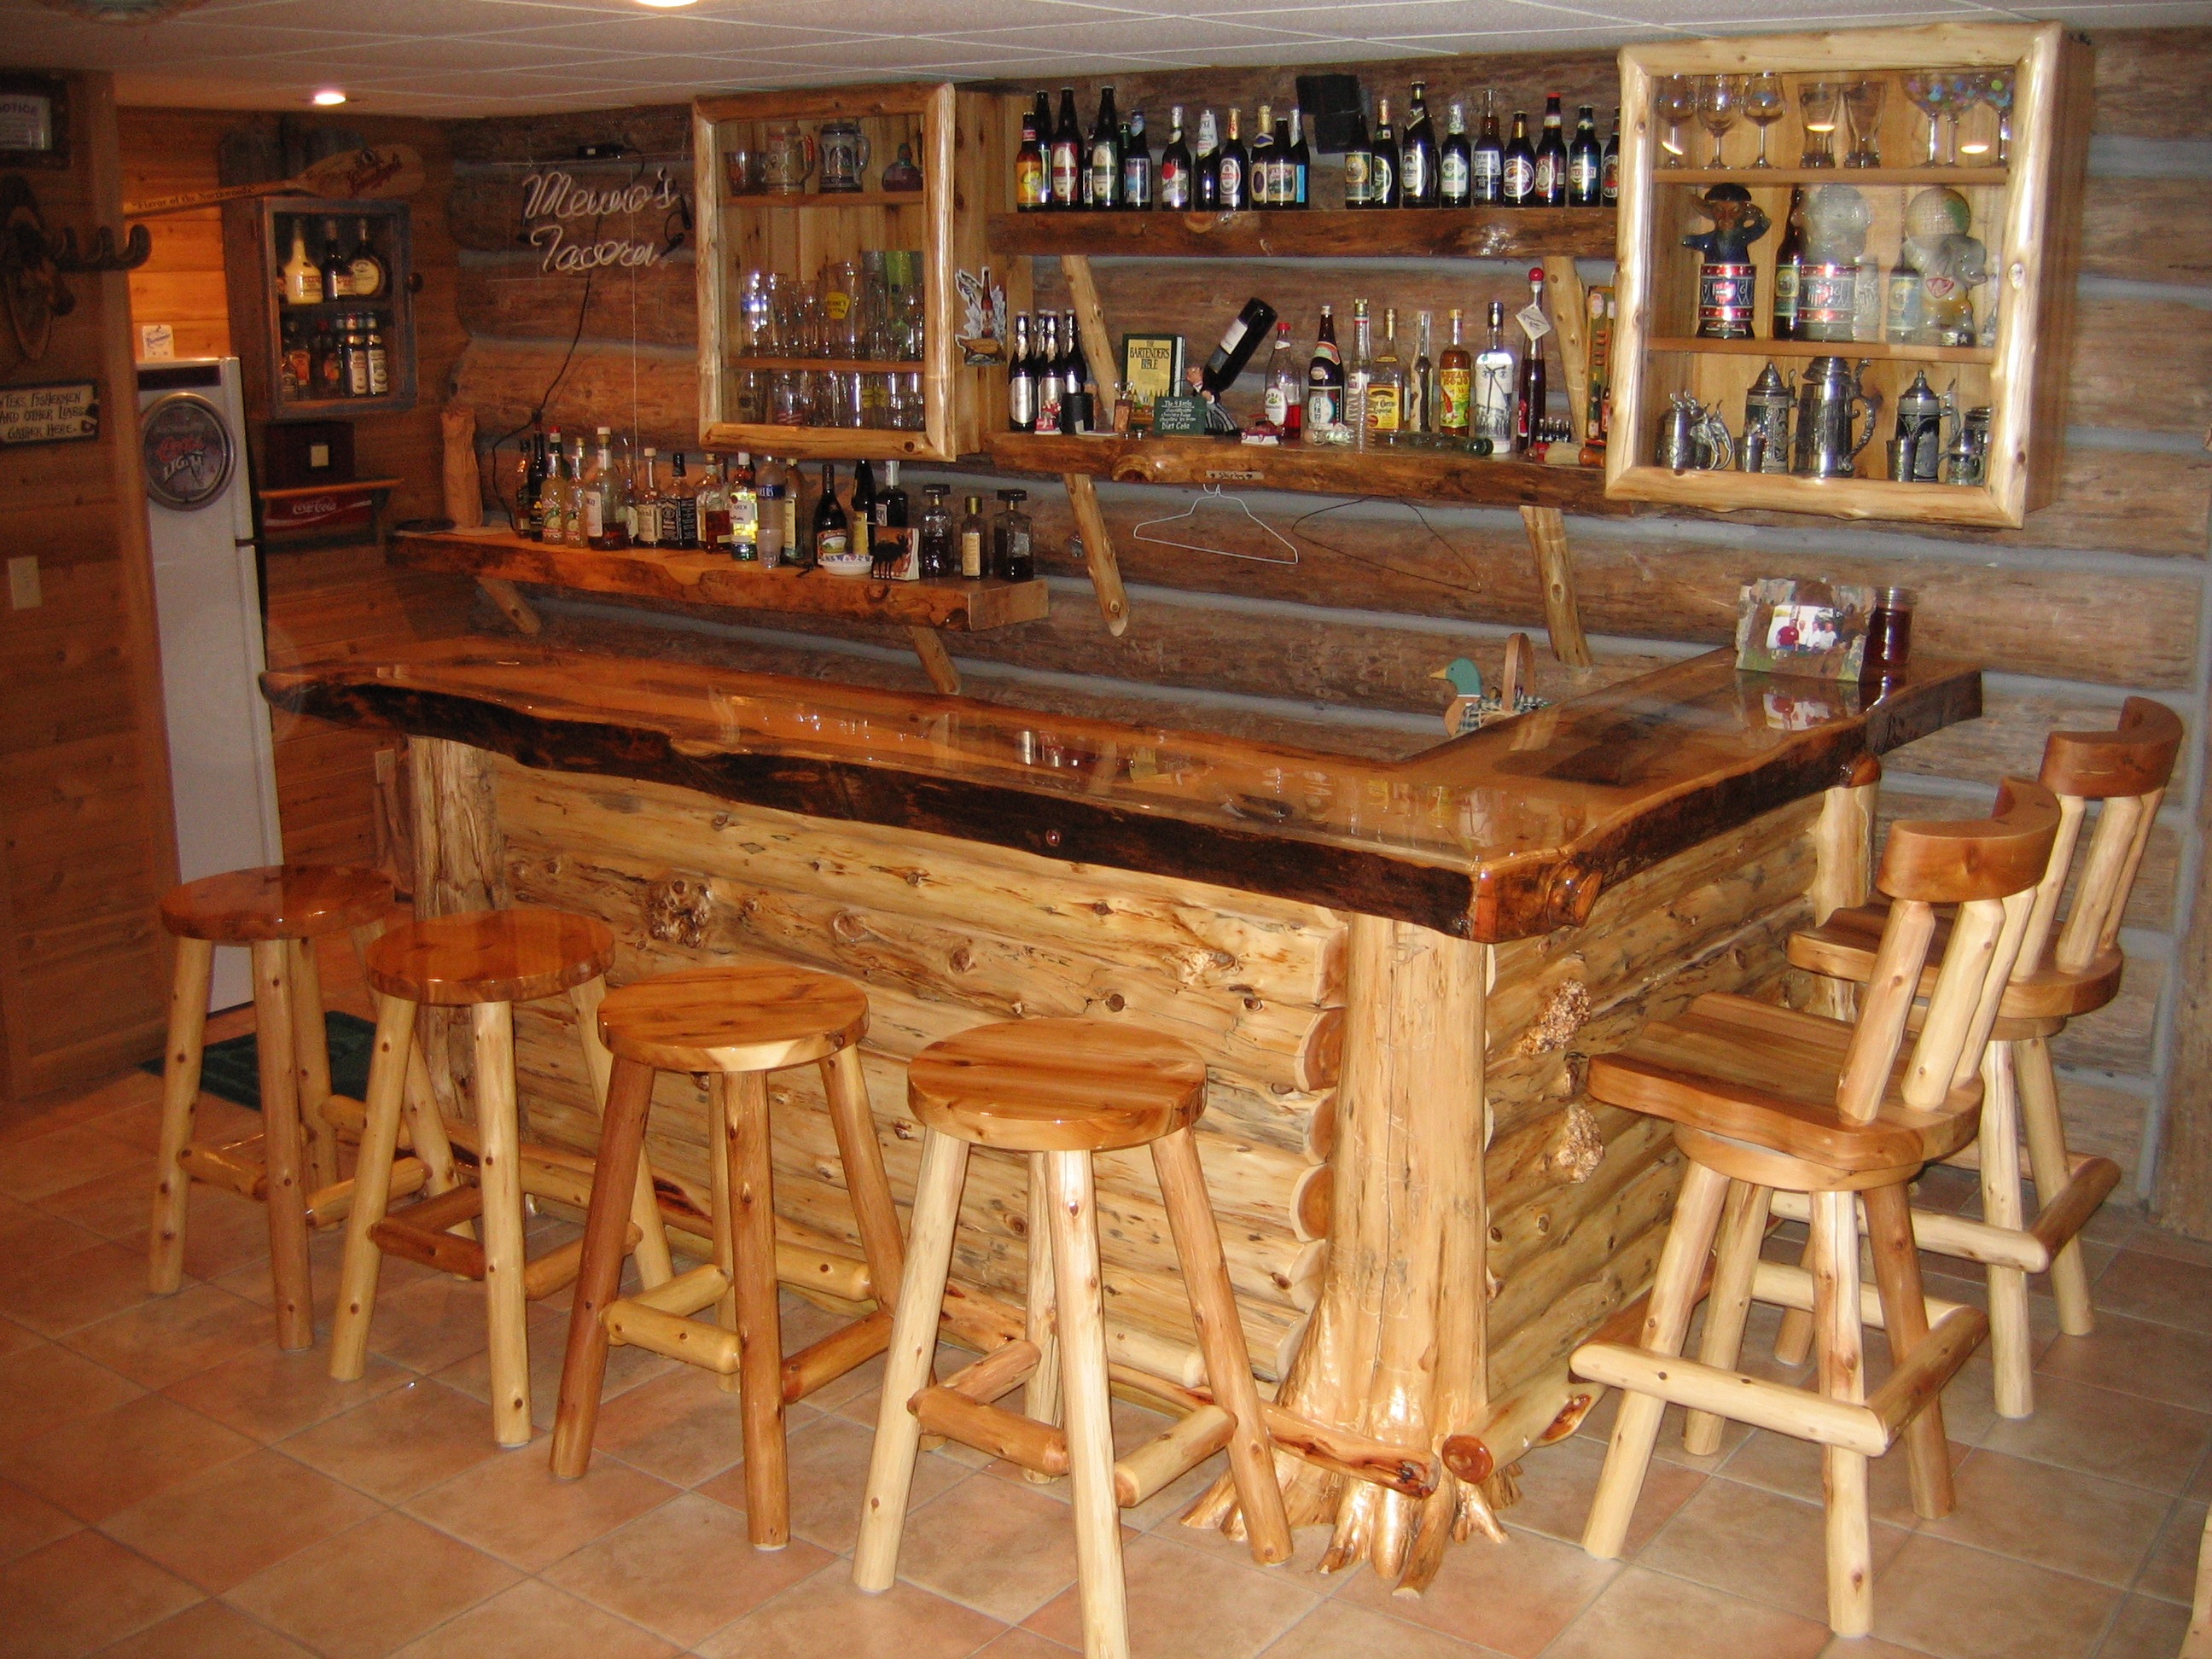 Custom wood bar and stools by Ryan's Rustic Railings